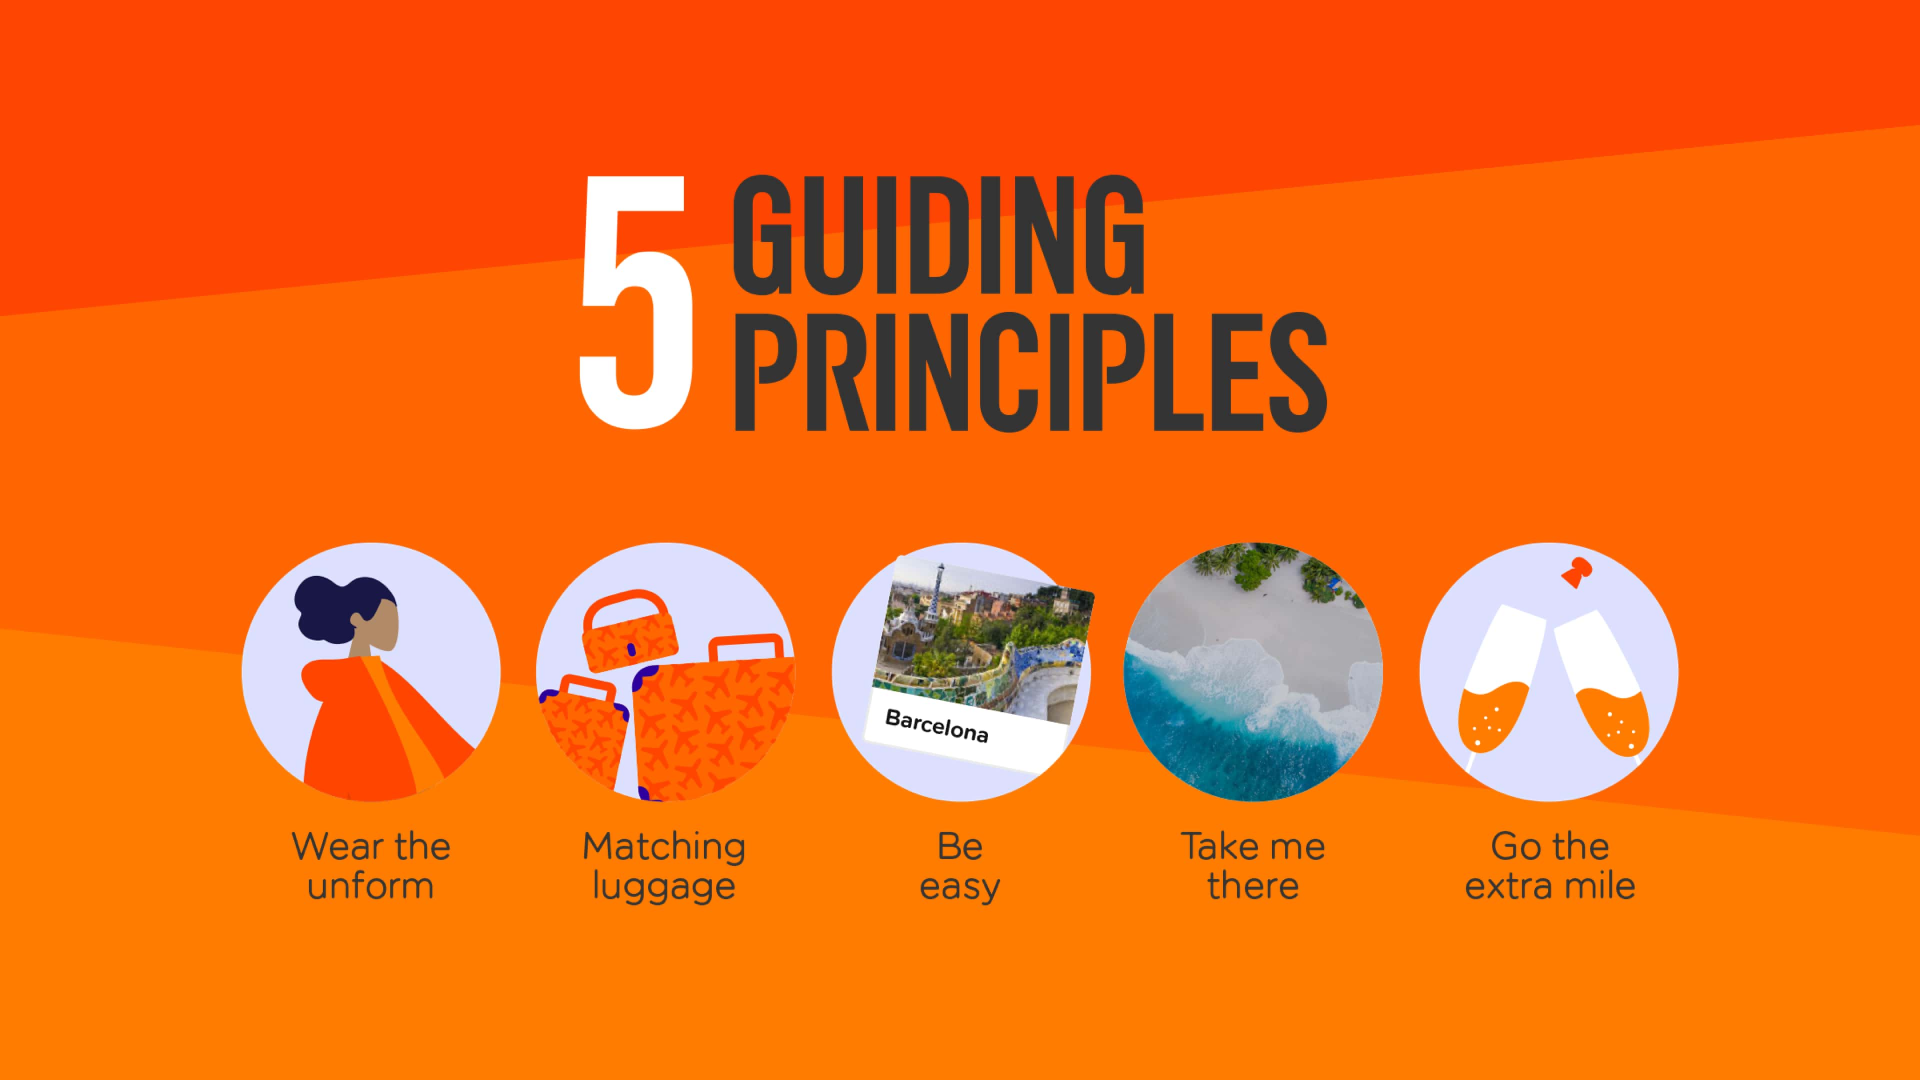 image of 5 guiding principles